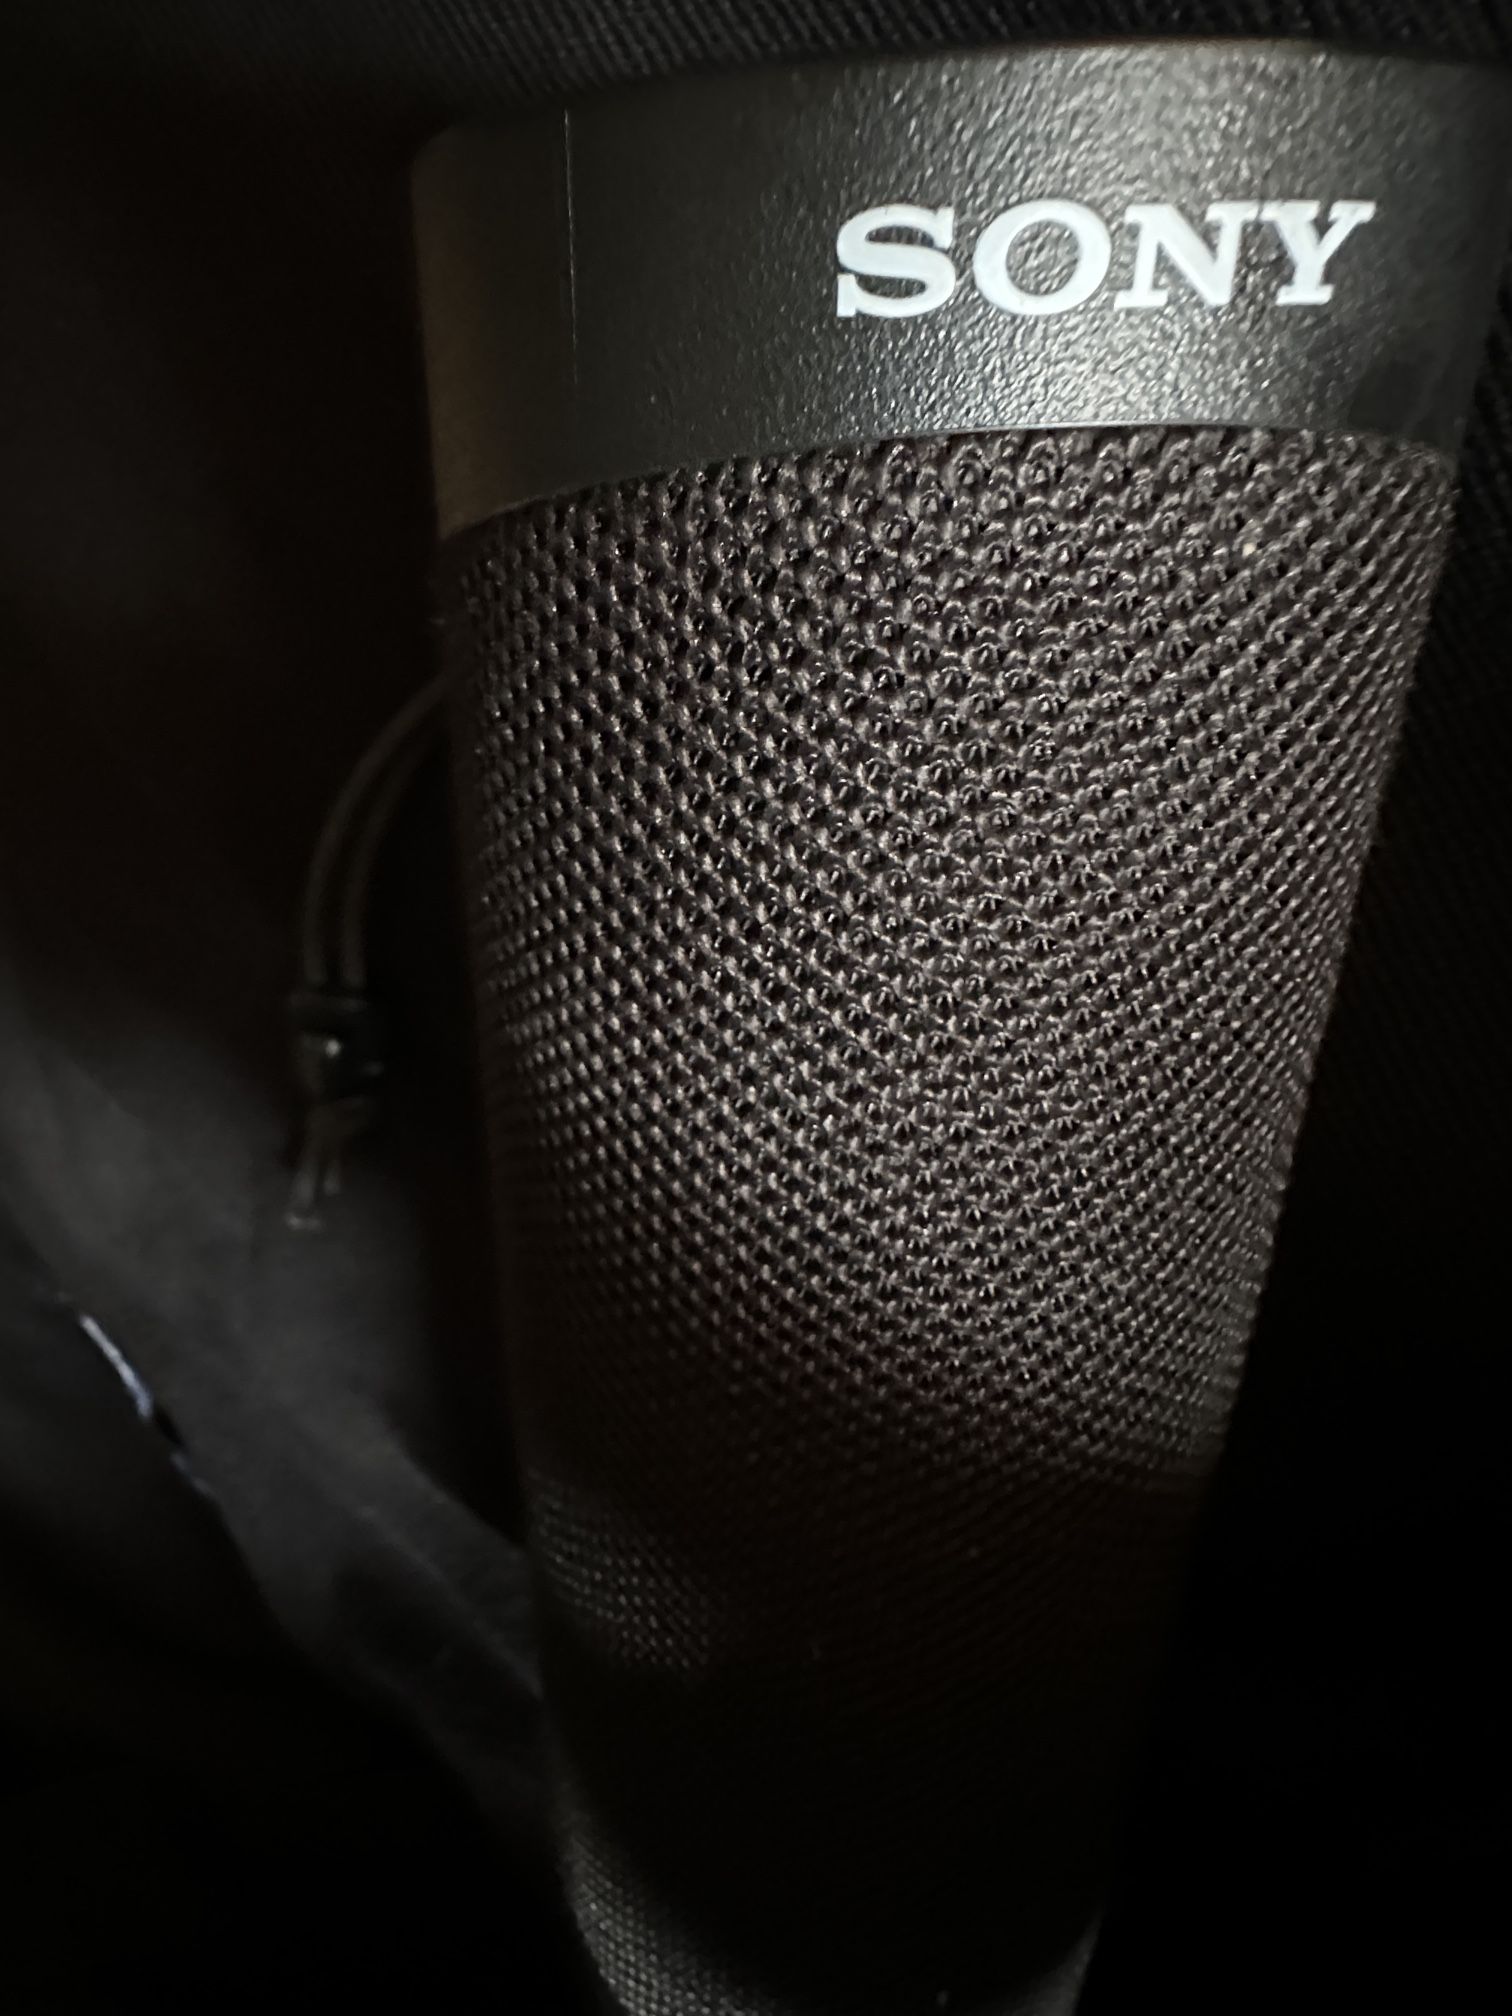 Sony SRS Xb 23 BT speaker